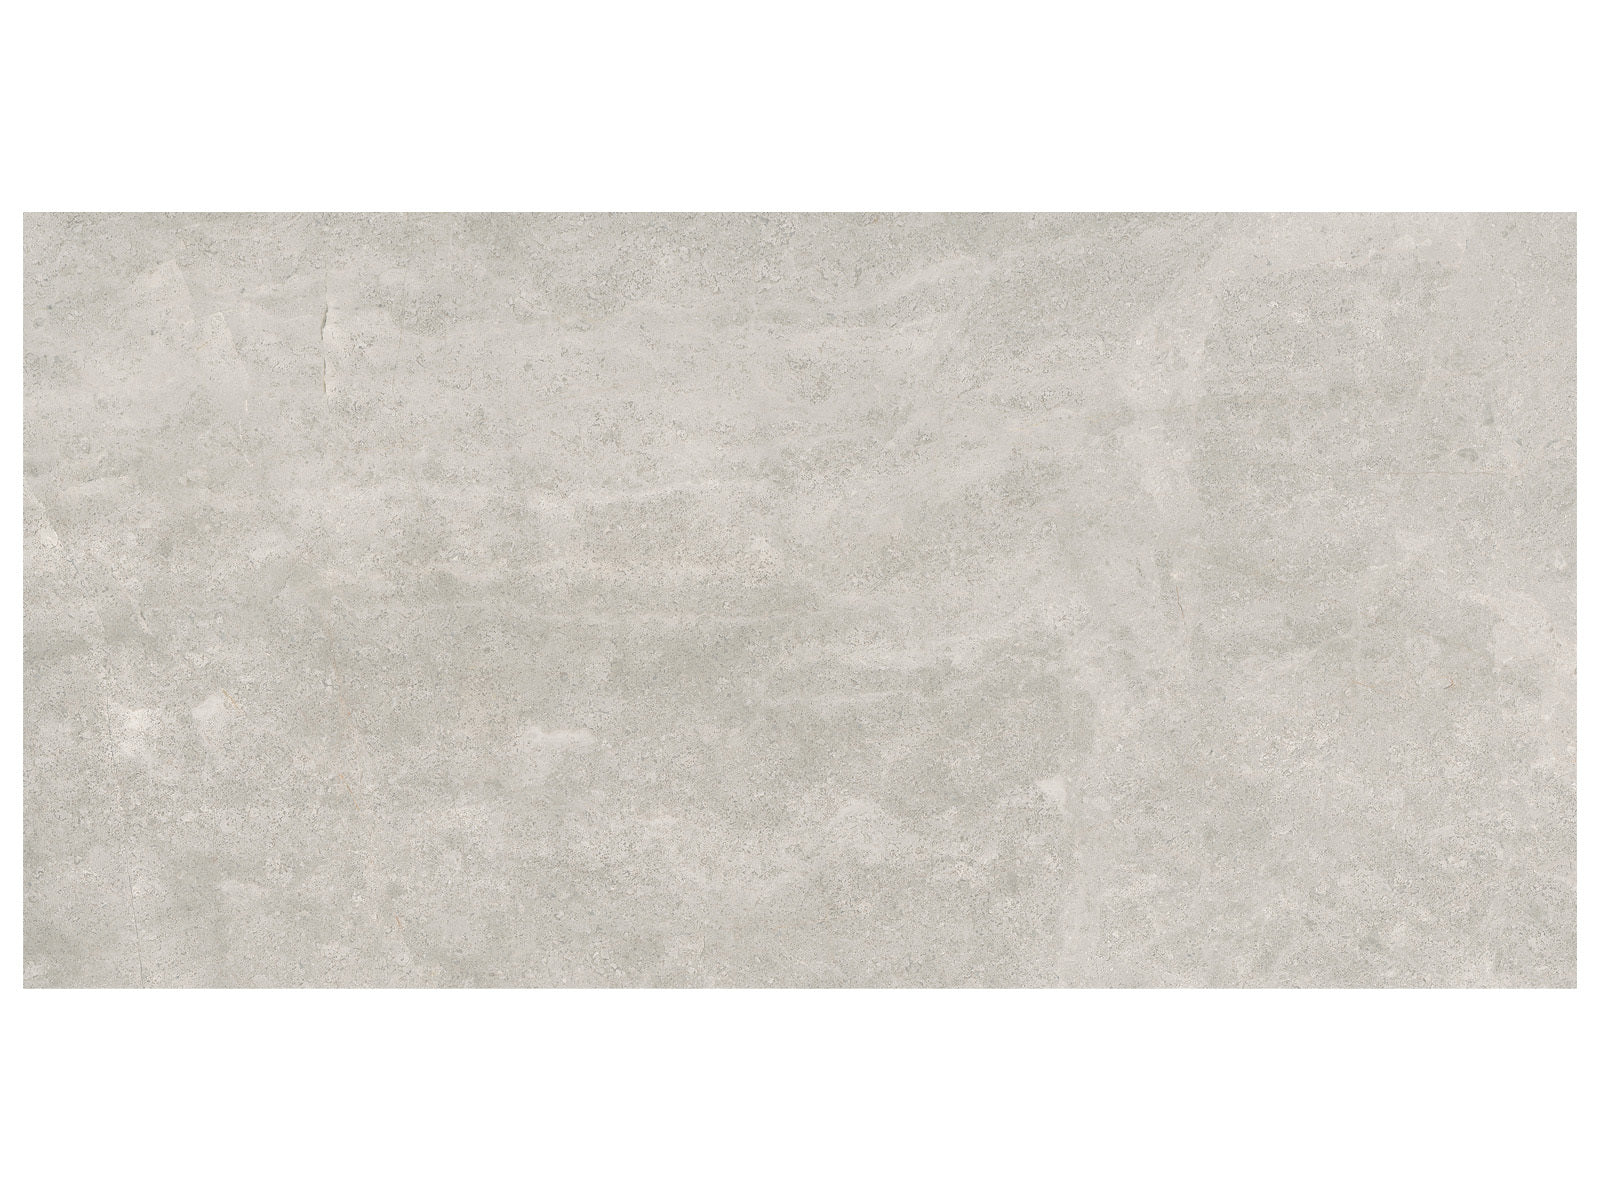 surface group anatolia marble anciano grigio natural stone field tile honed straight edge rectangle 12х24